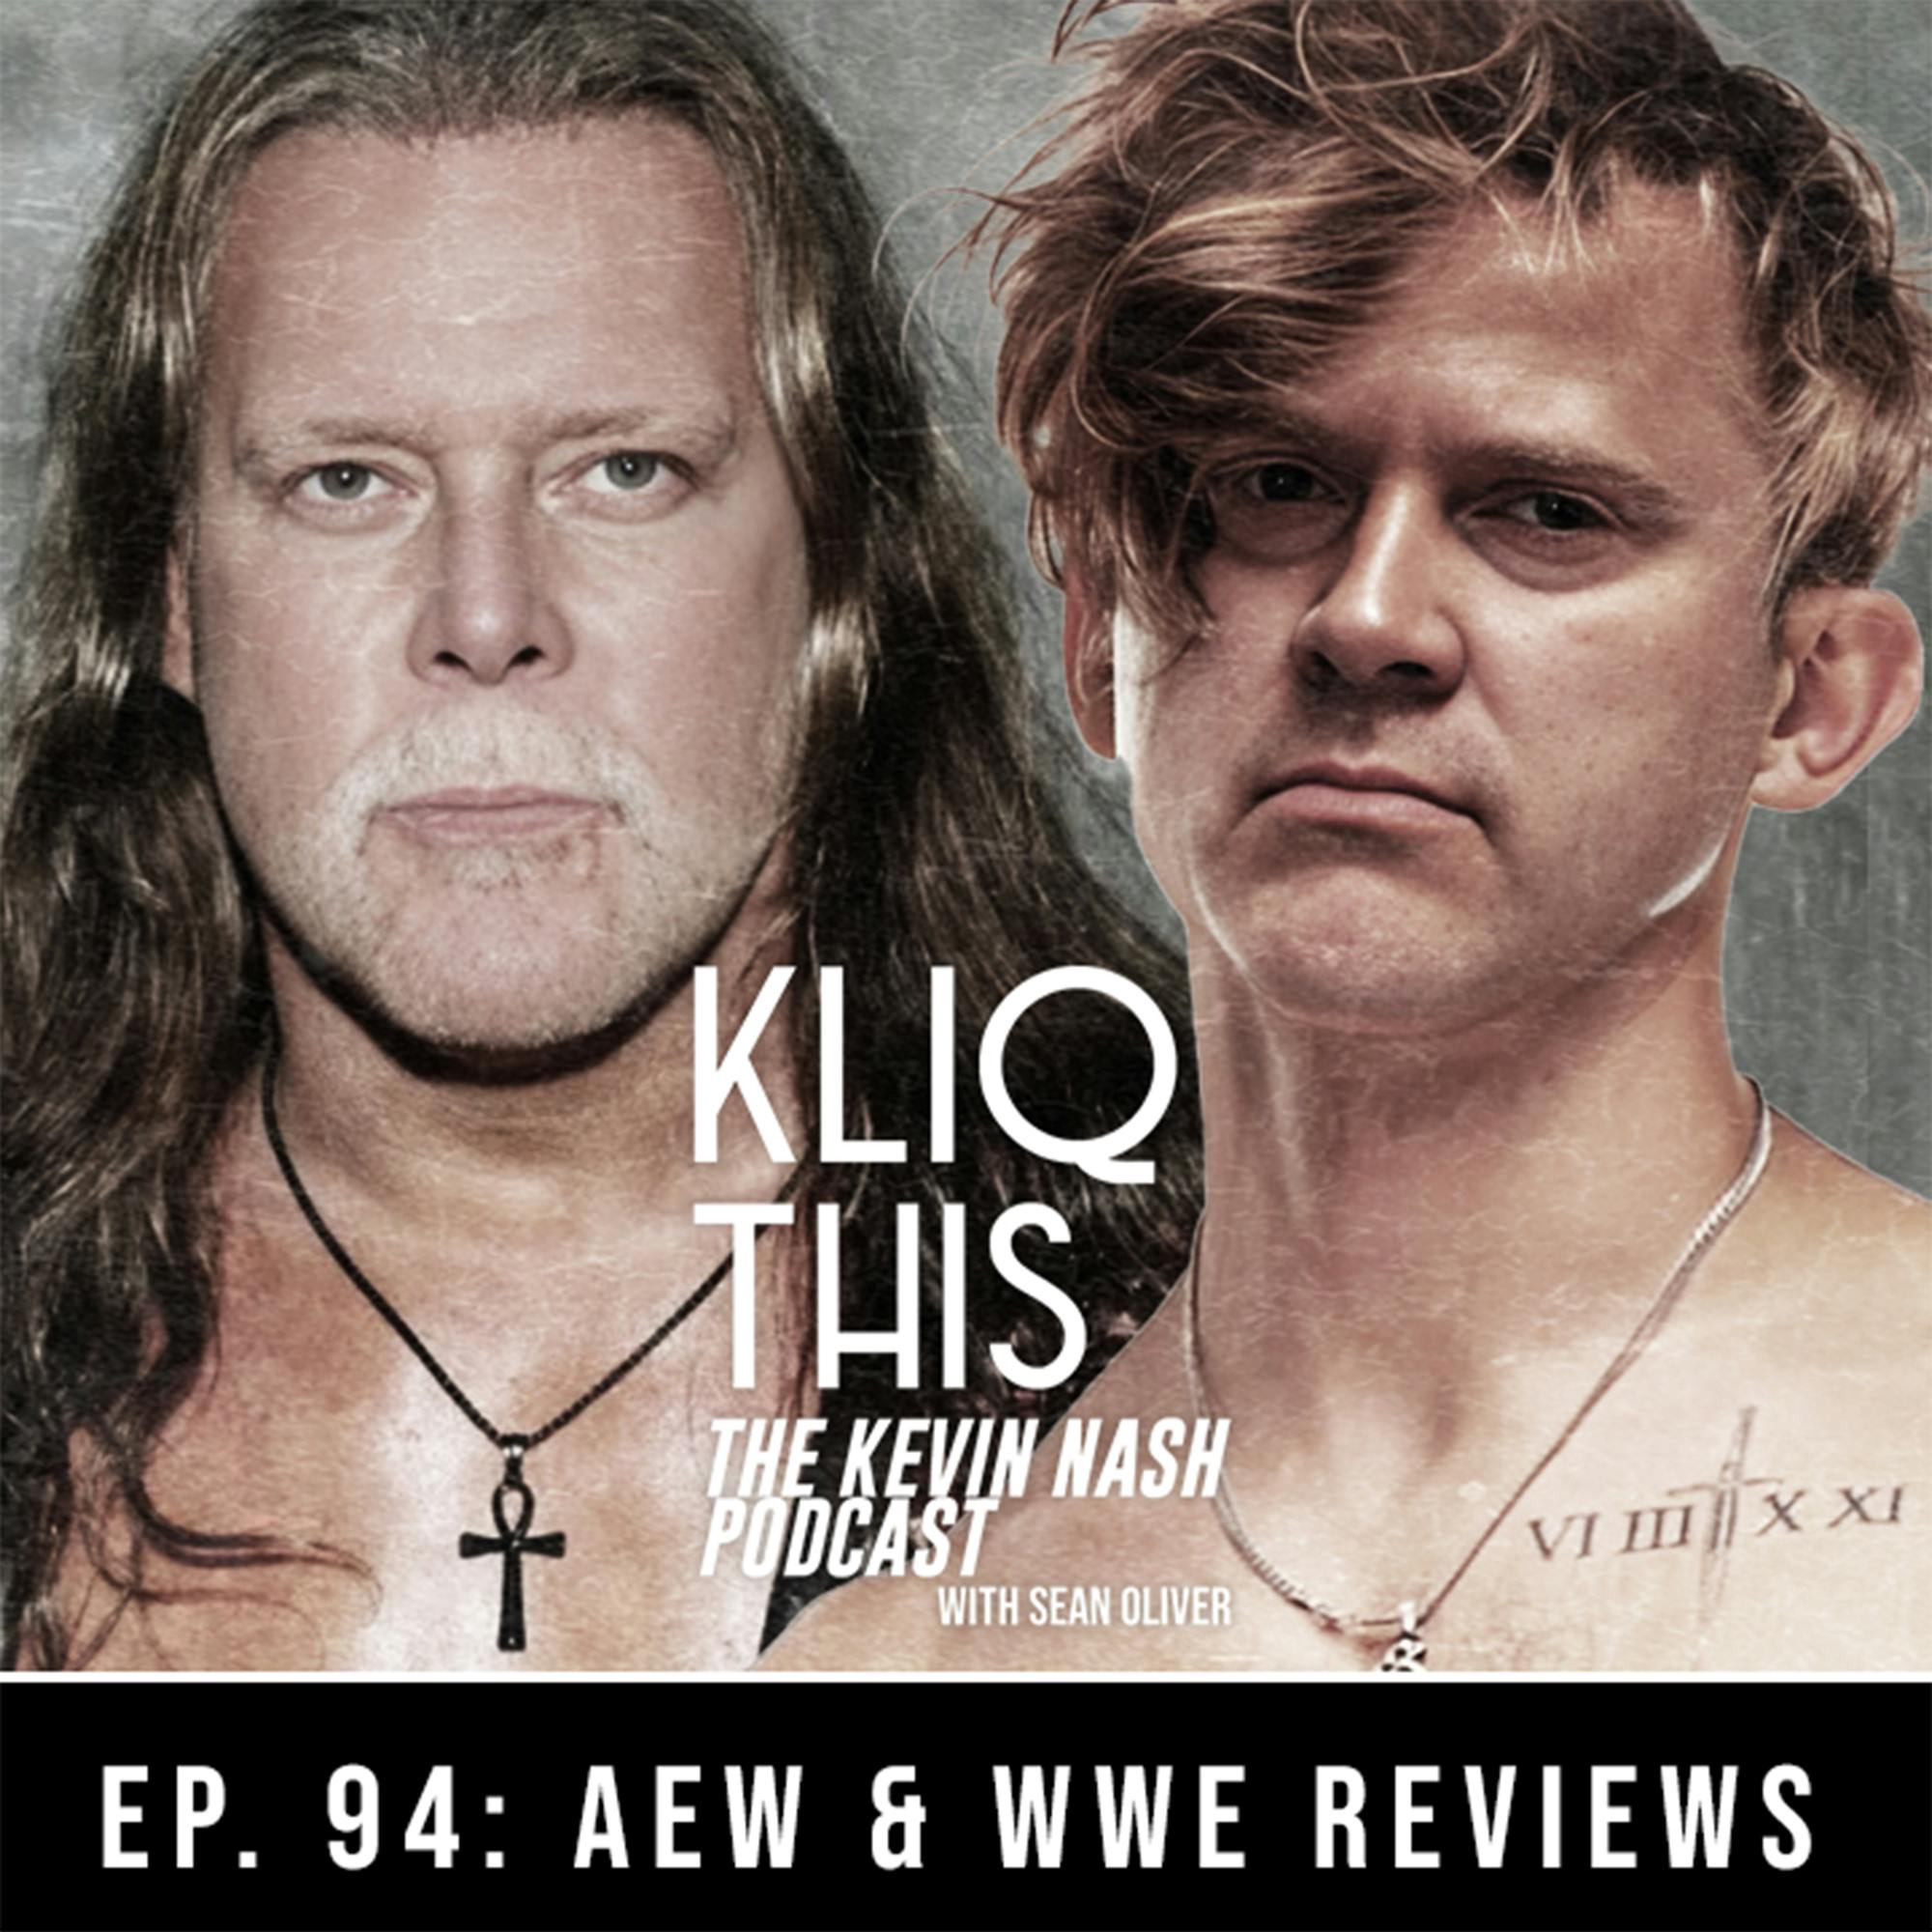 WWE & AEW Reviews